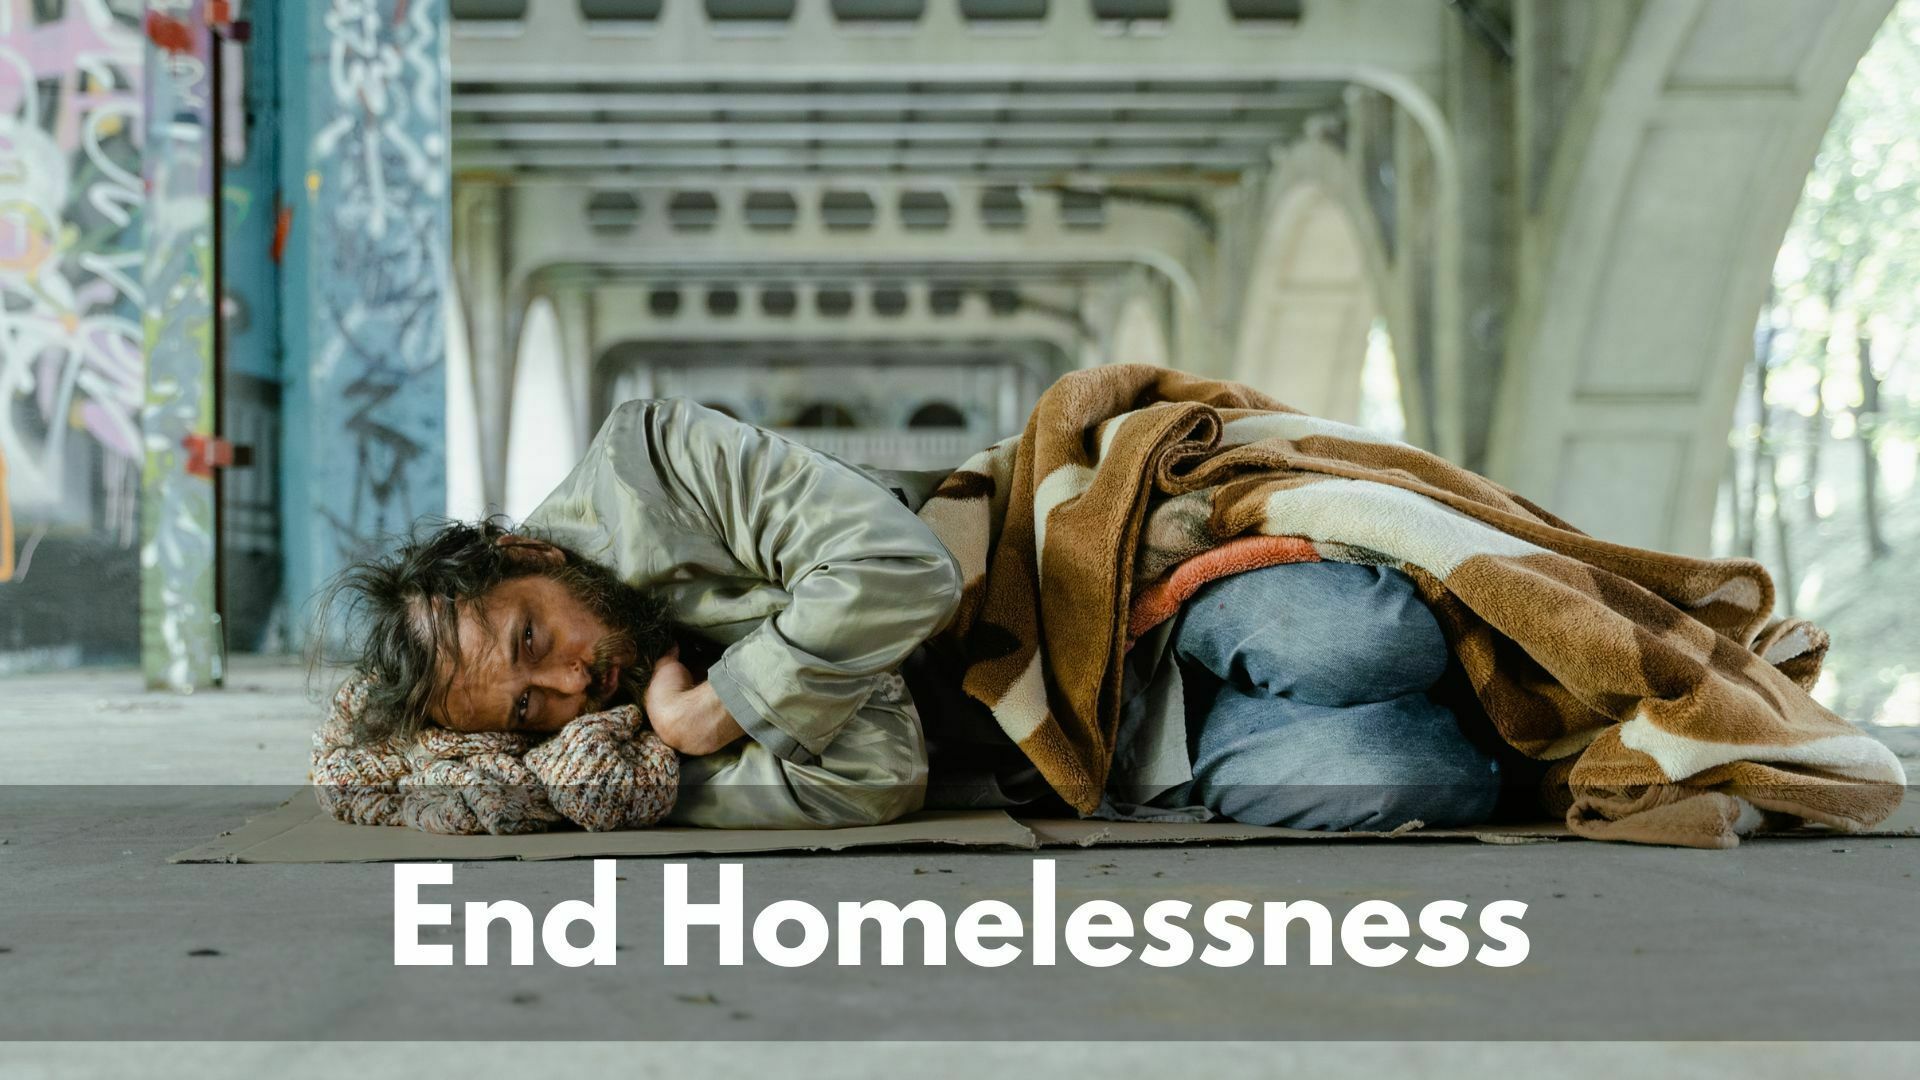 End homelessness 1920x1080